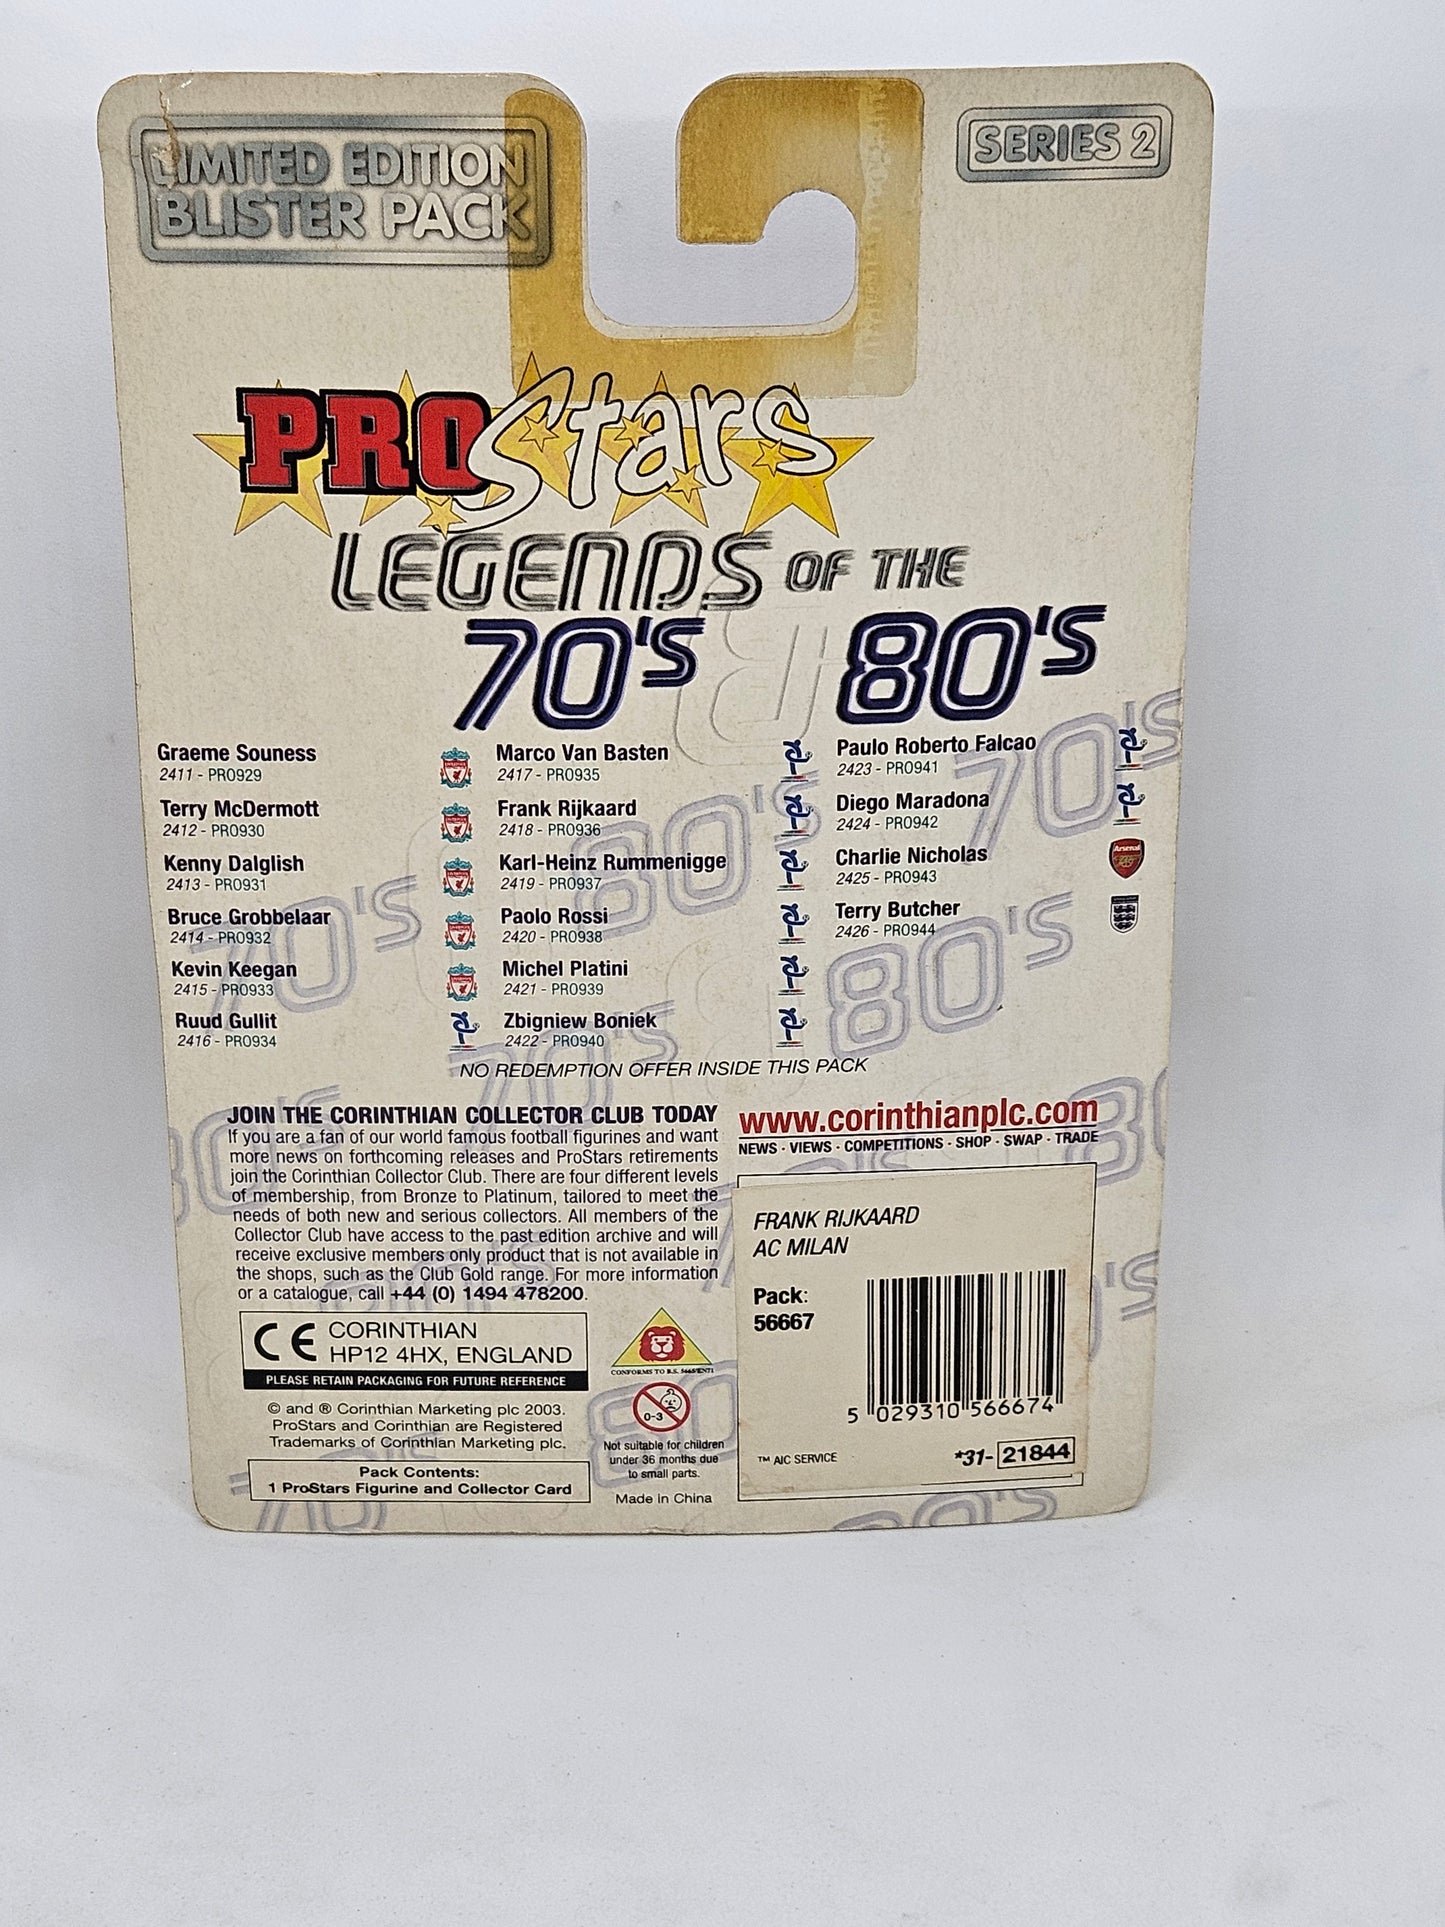 Frank Rijkaard (AC Milan) Pro Stars Legends Of The 70s & 80s Series PRO936